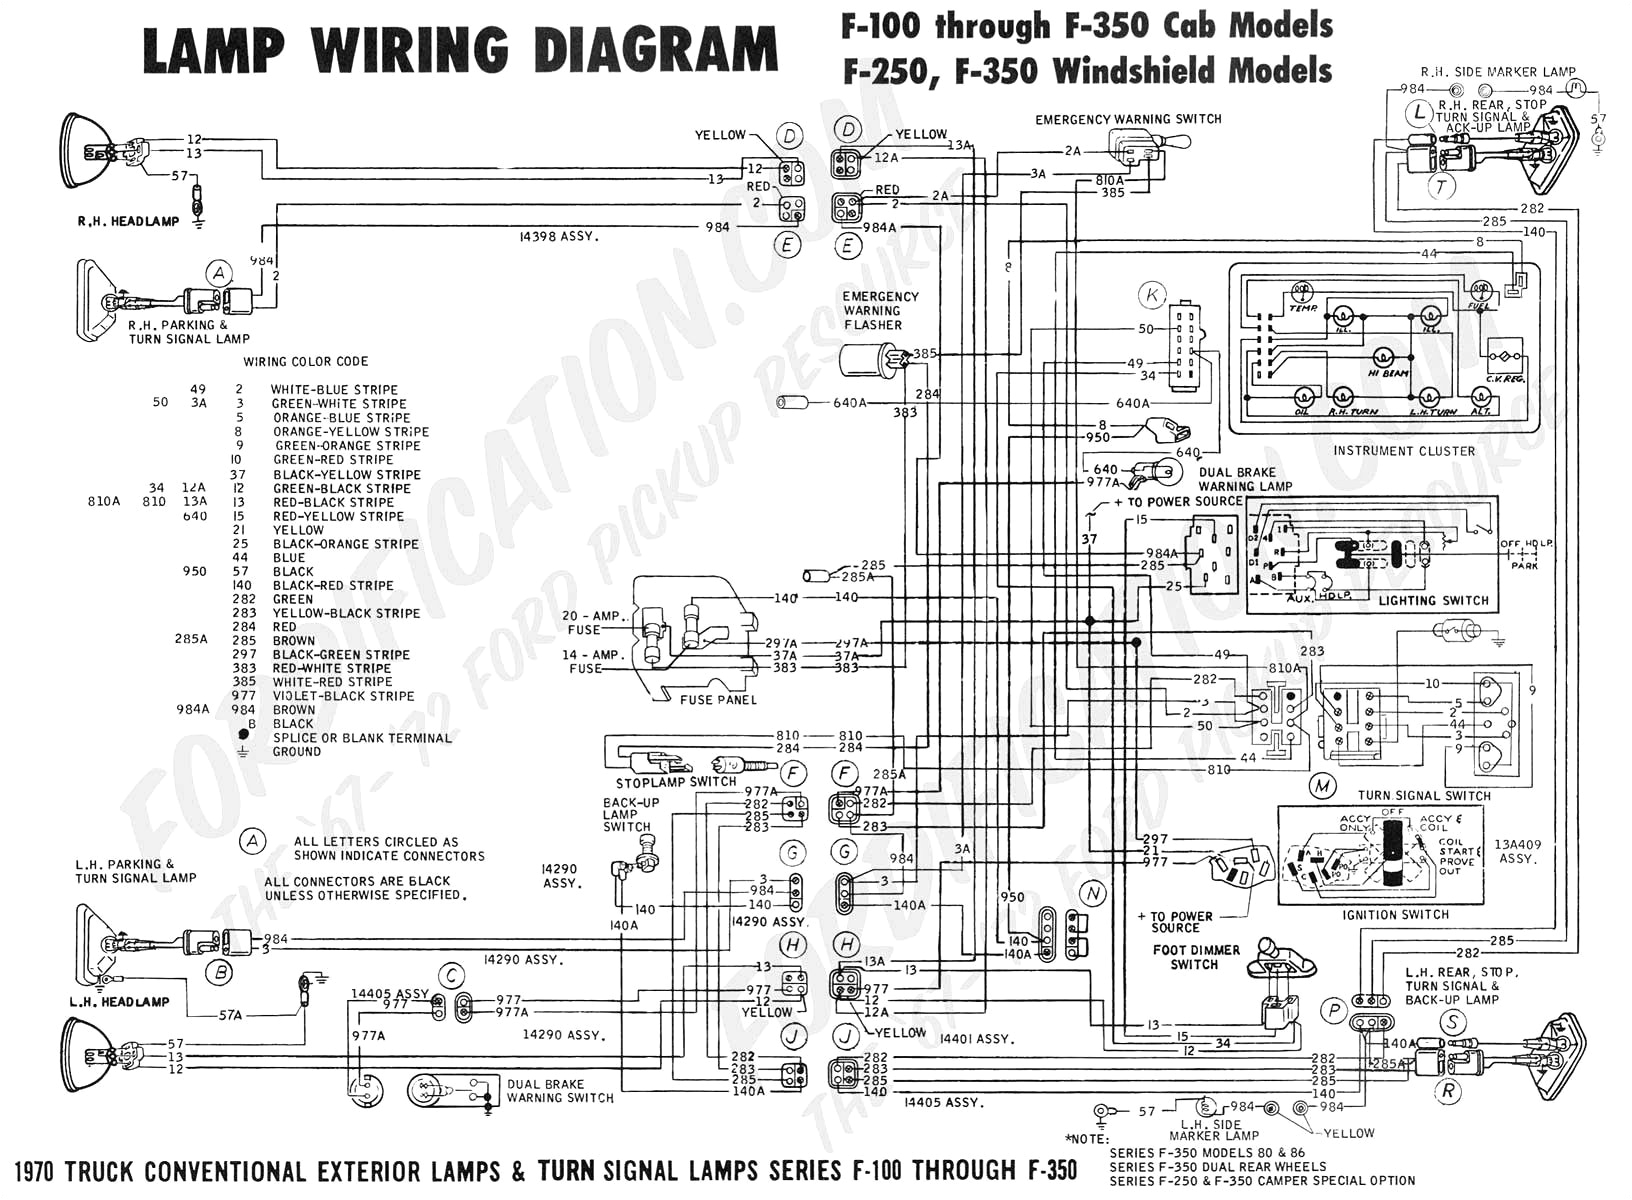 mcquay snyder three phase wiring diagram wiring diagram view mcquay wiring schematics